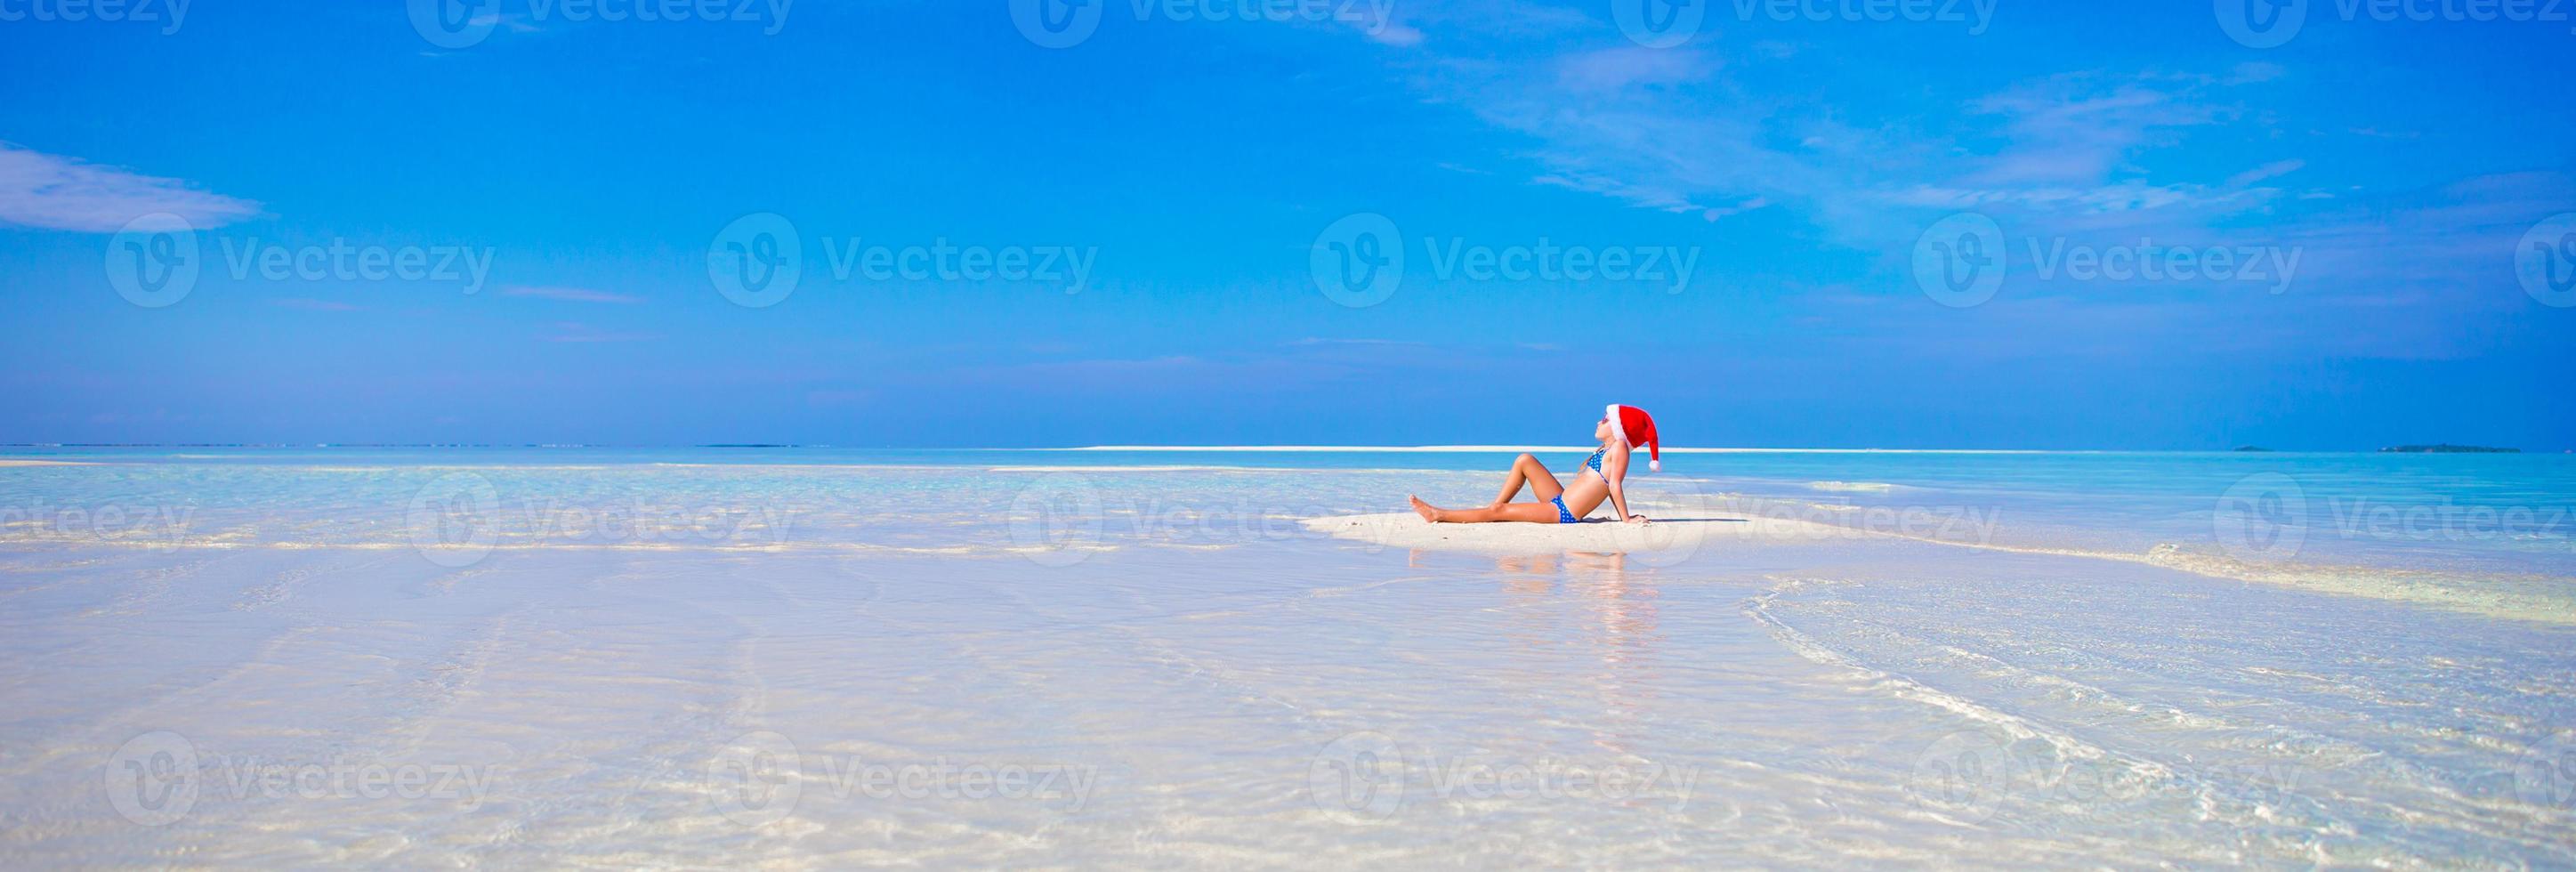 weinig meisje in de kerstman hoed Aan wit strand gedurende Kerstmis vakantie foto